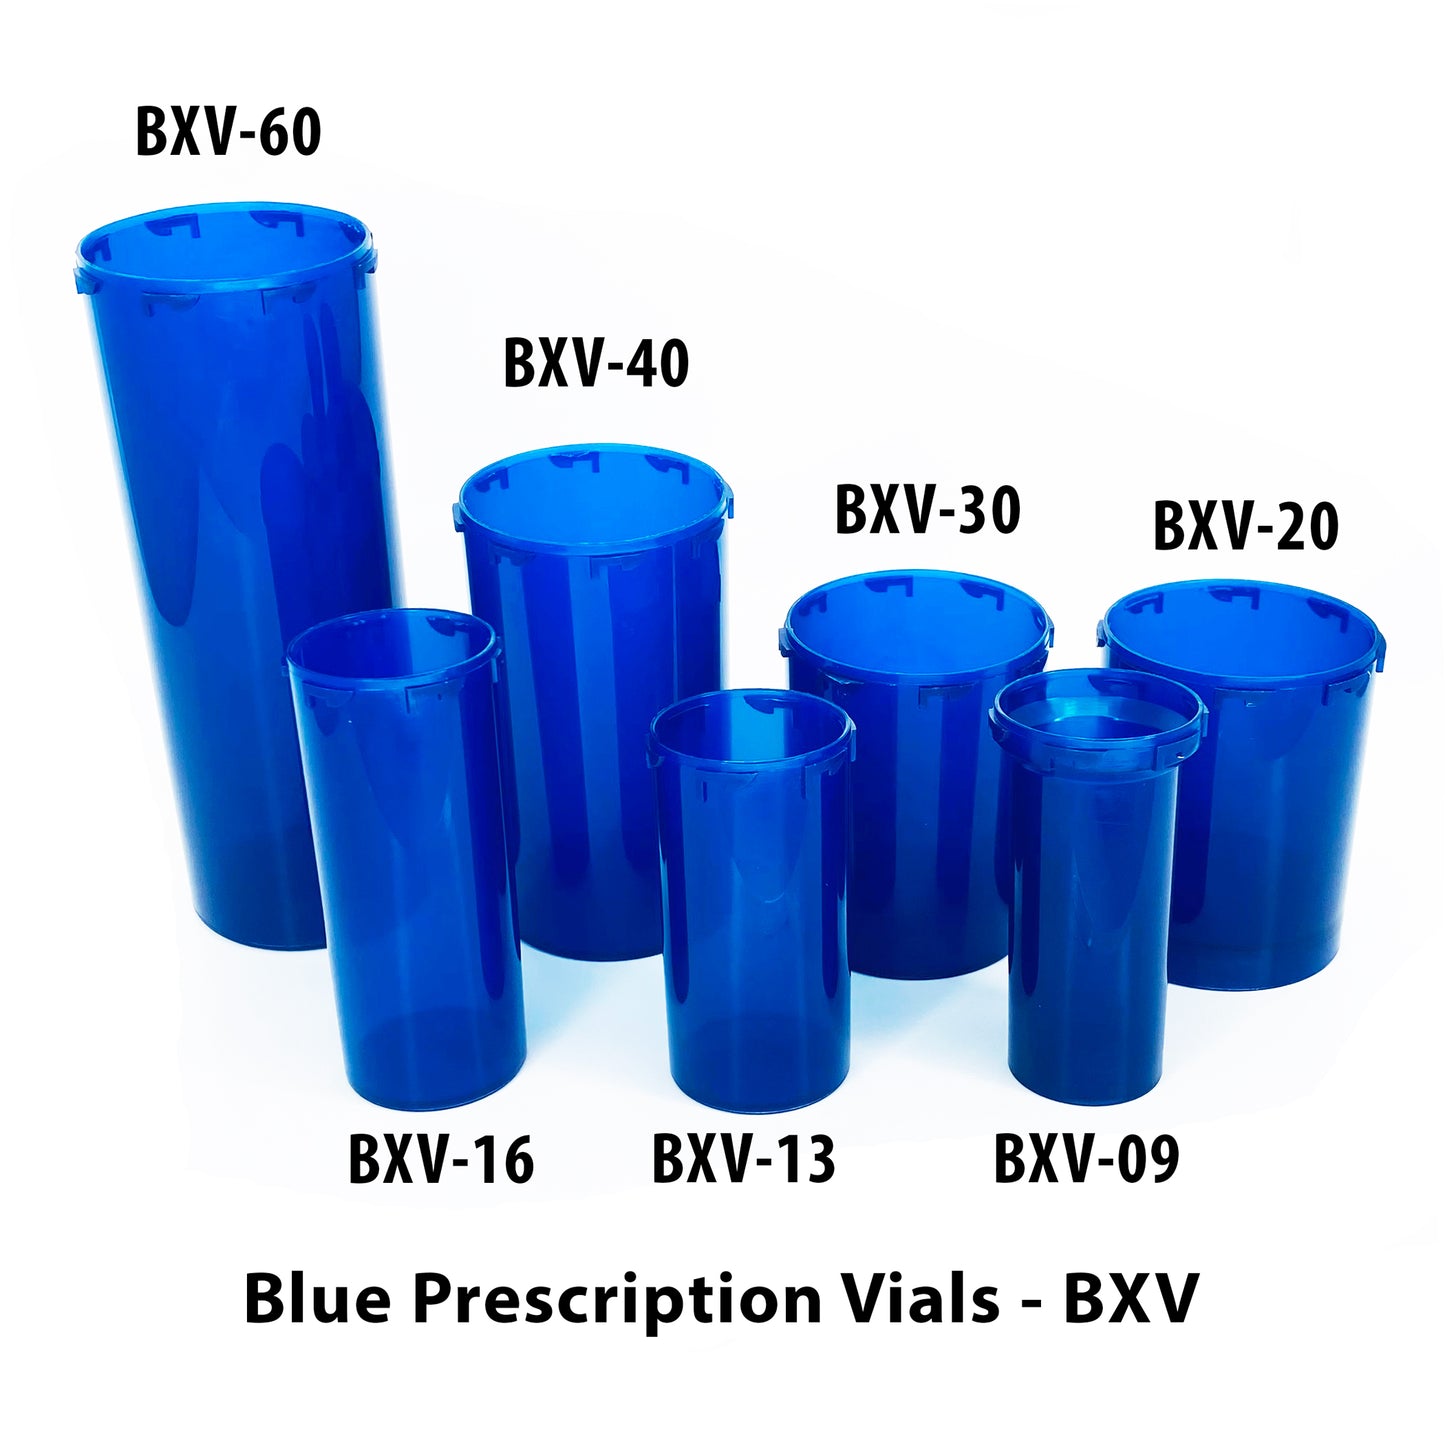 Blue Prescription Vials (BXV)